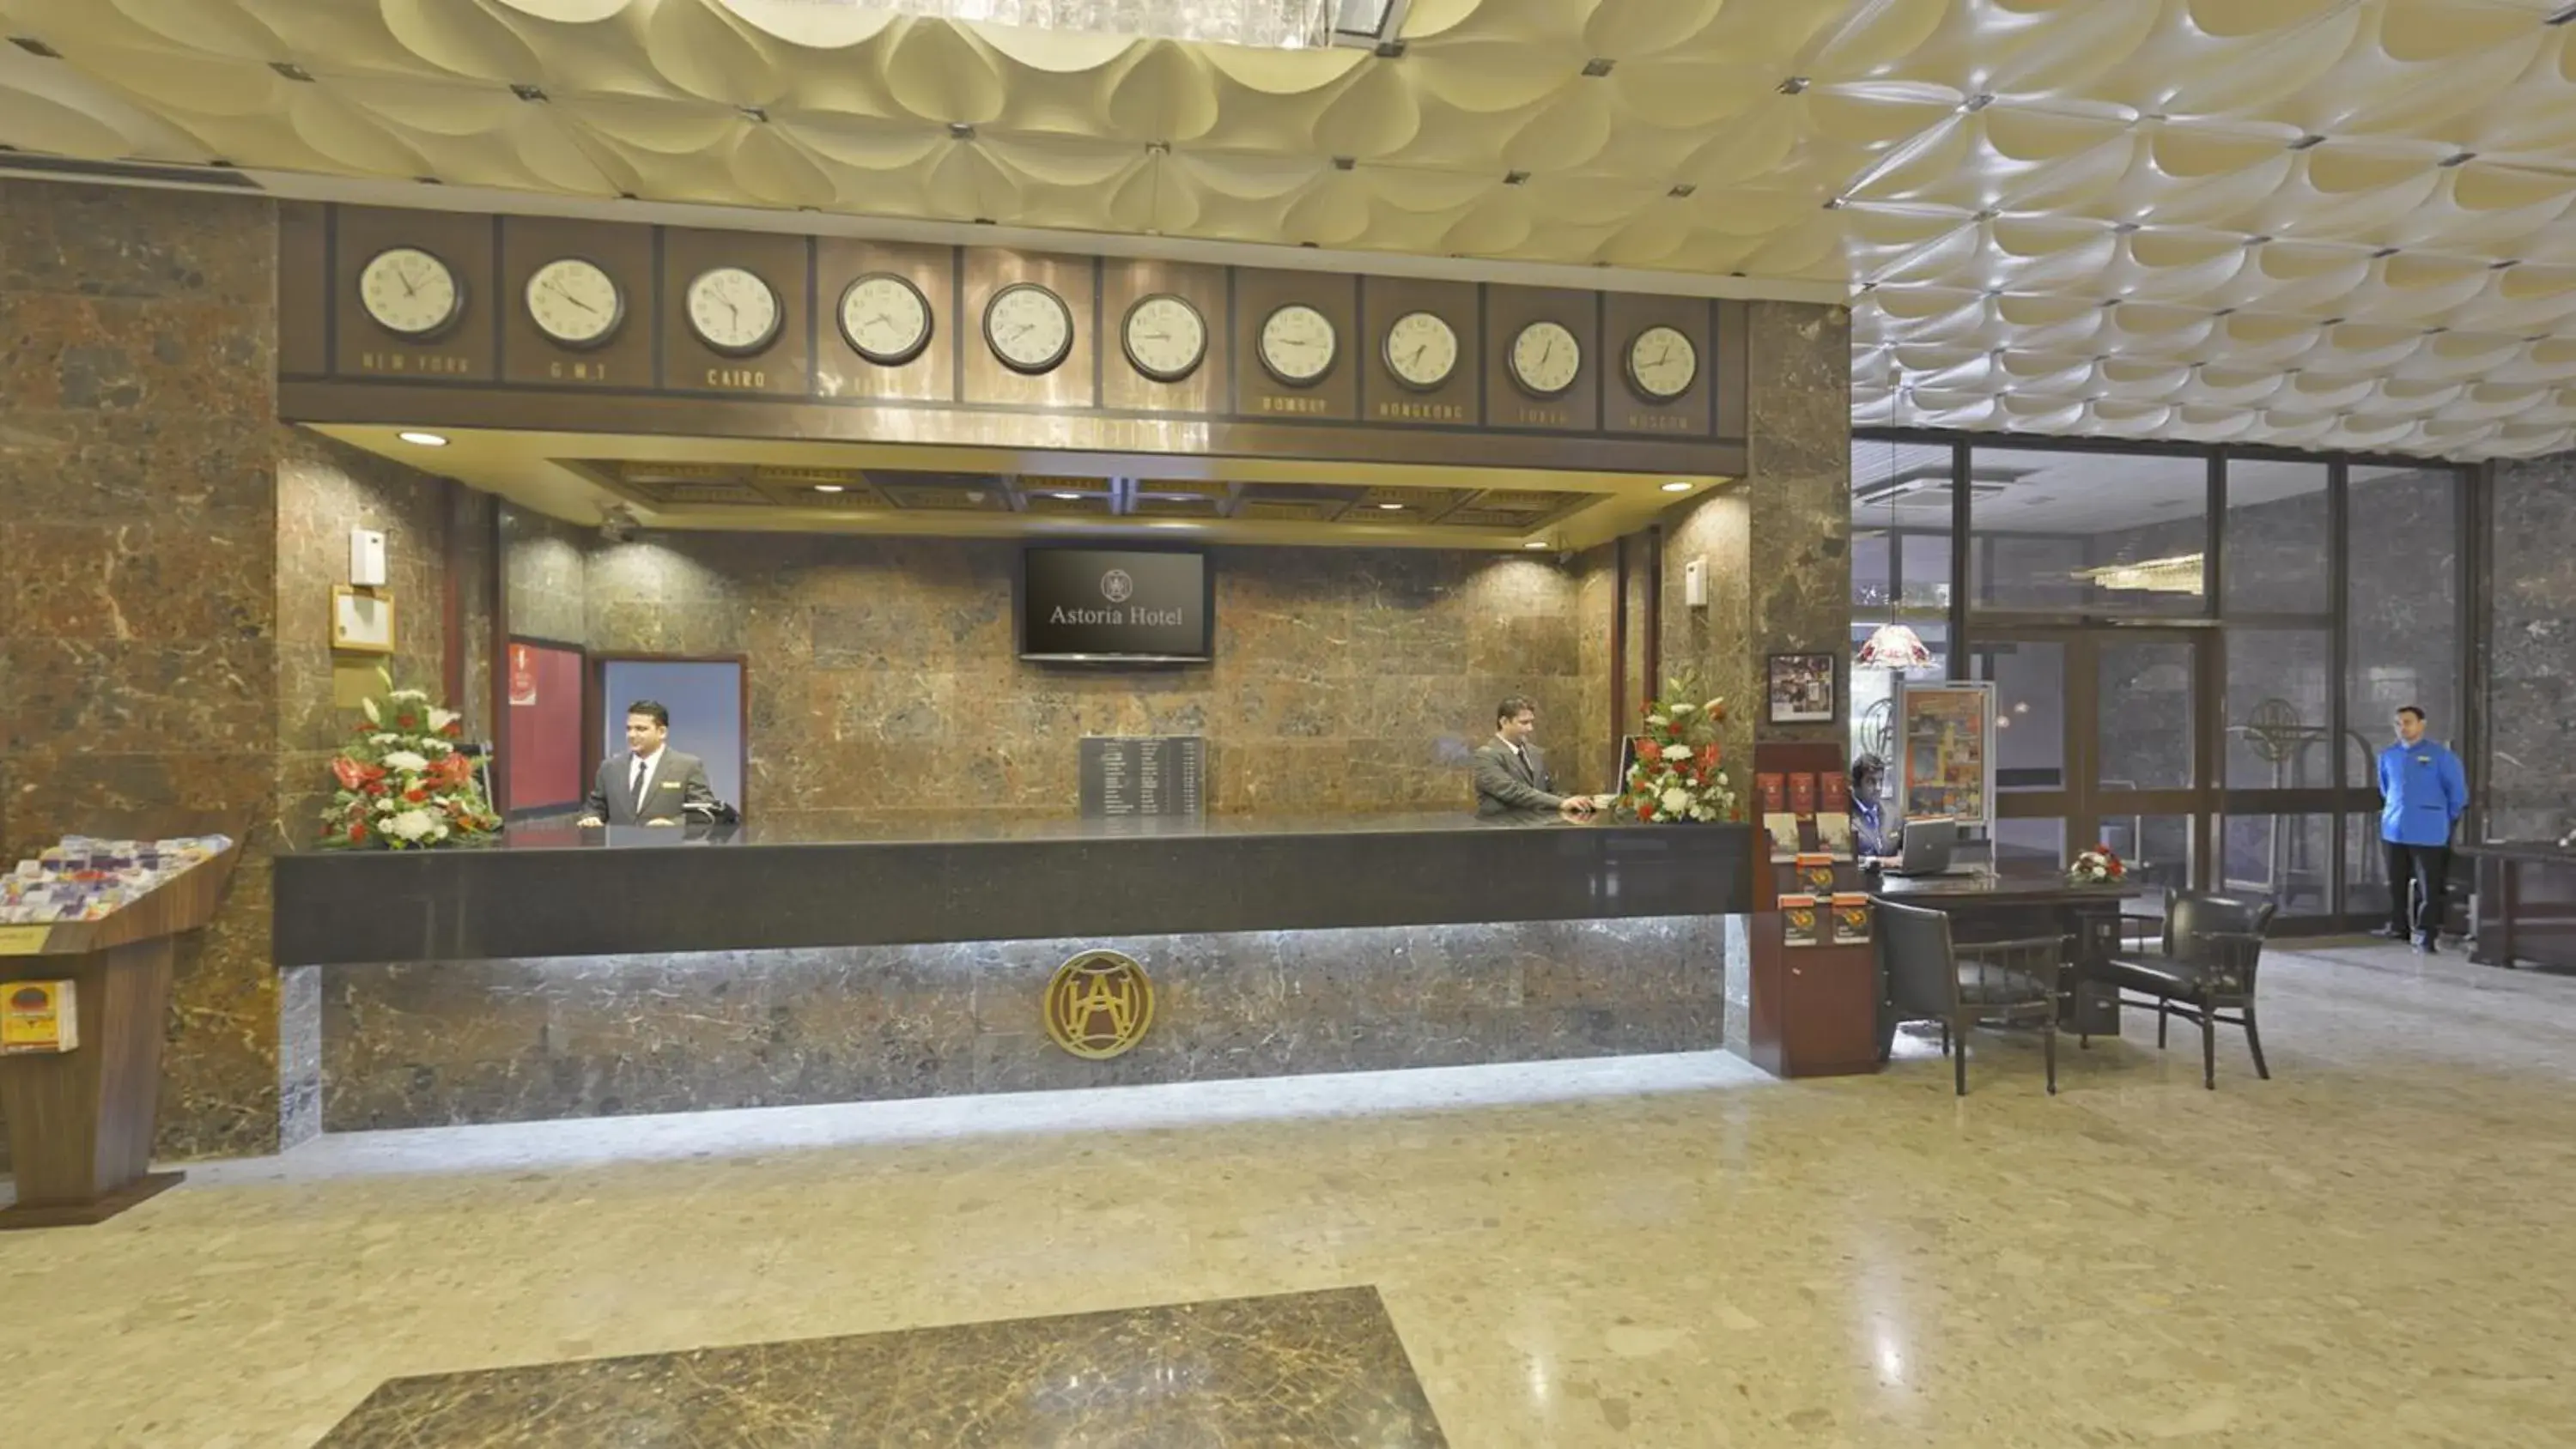 Lobby or reception in Astoria Hotel